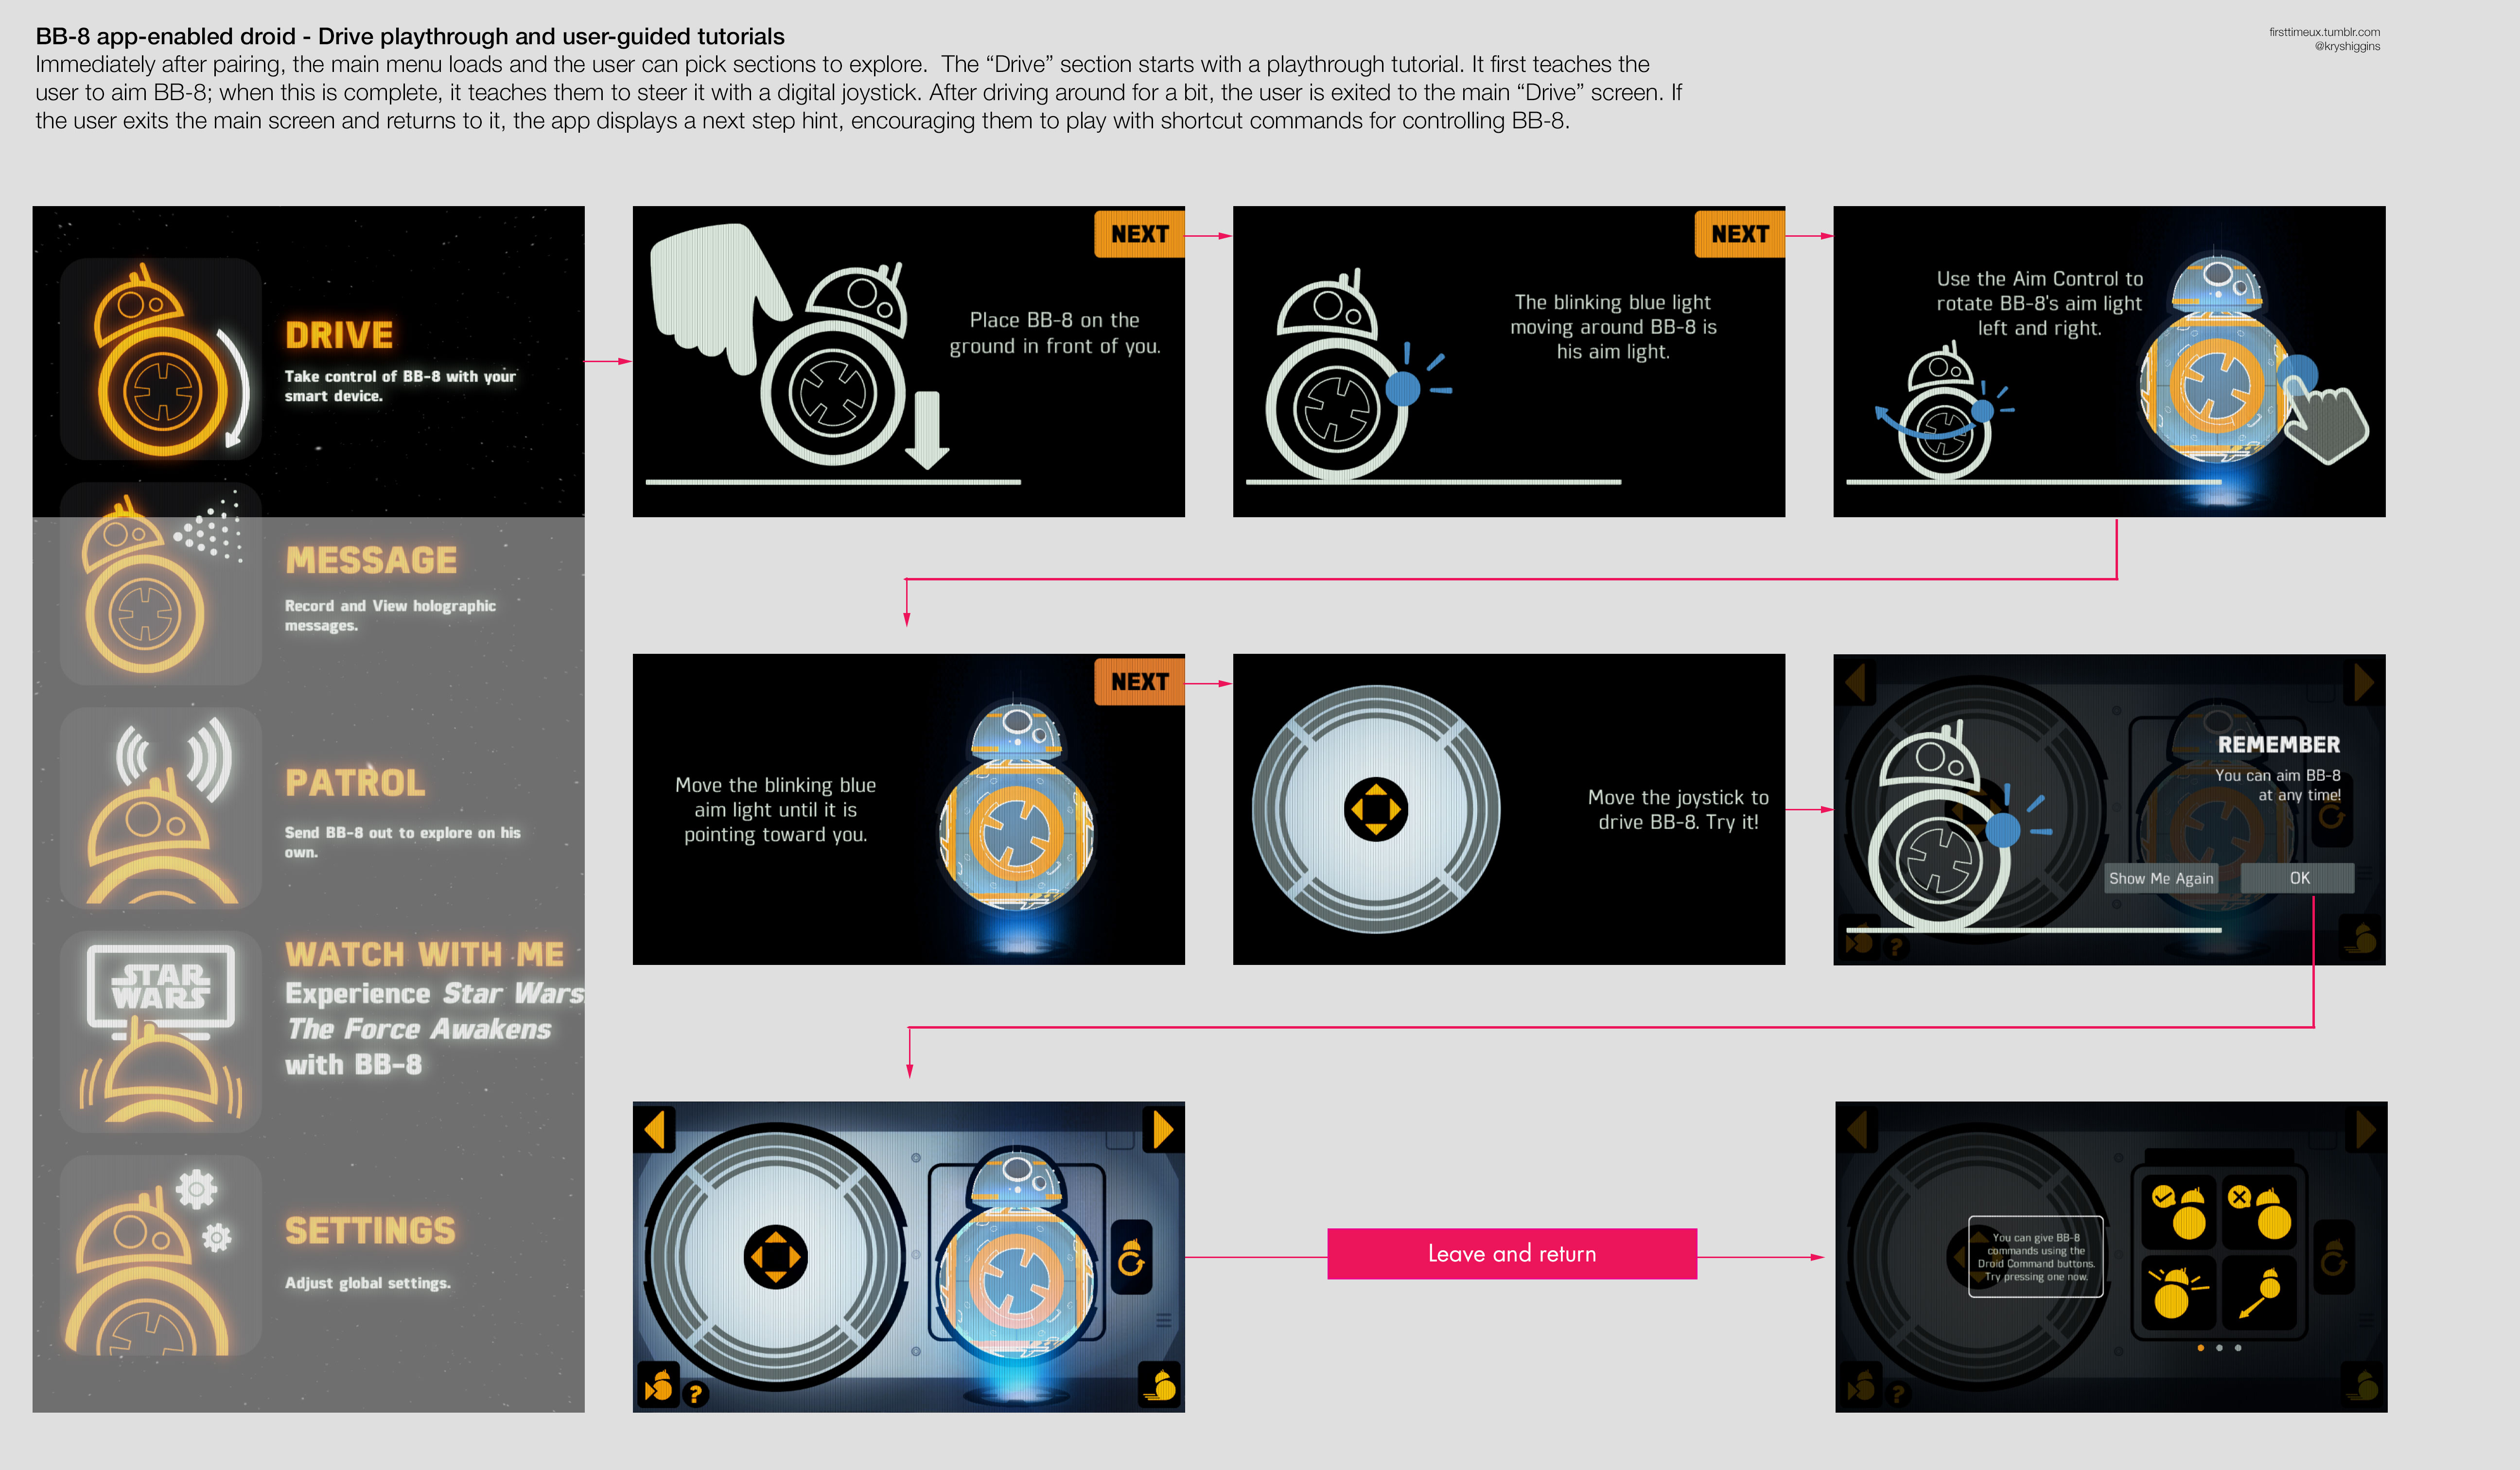 Screenshots of BB8 app playthrough tutorials